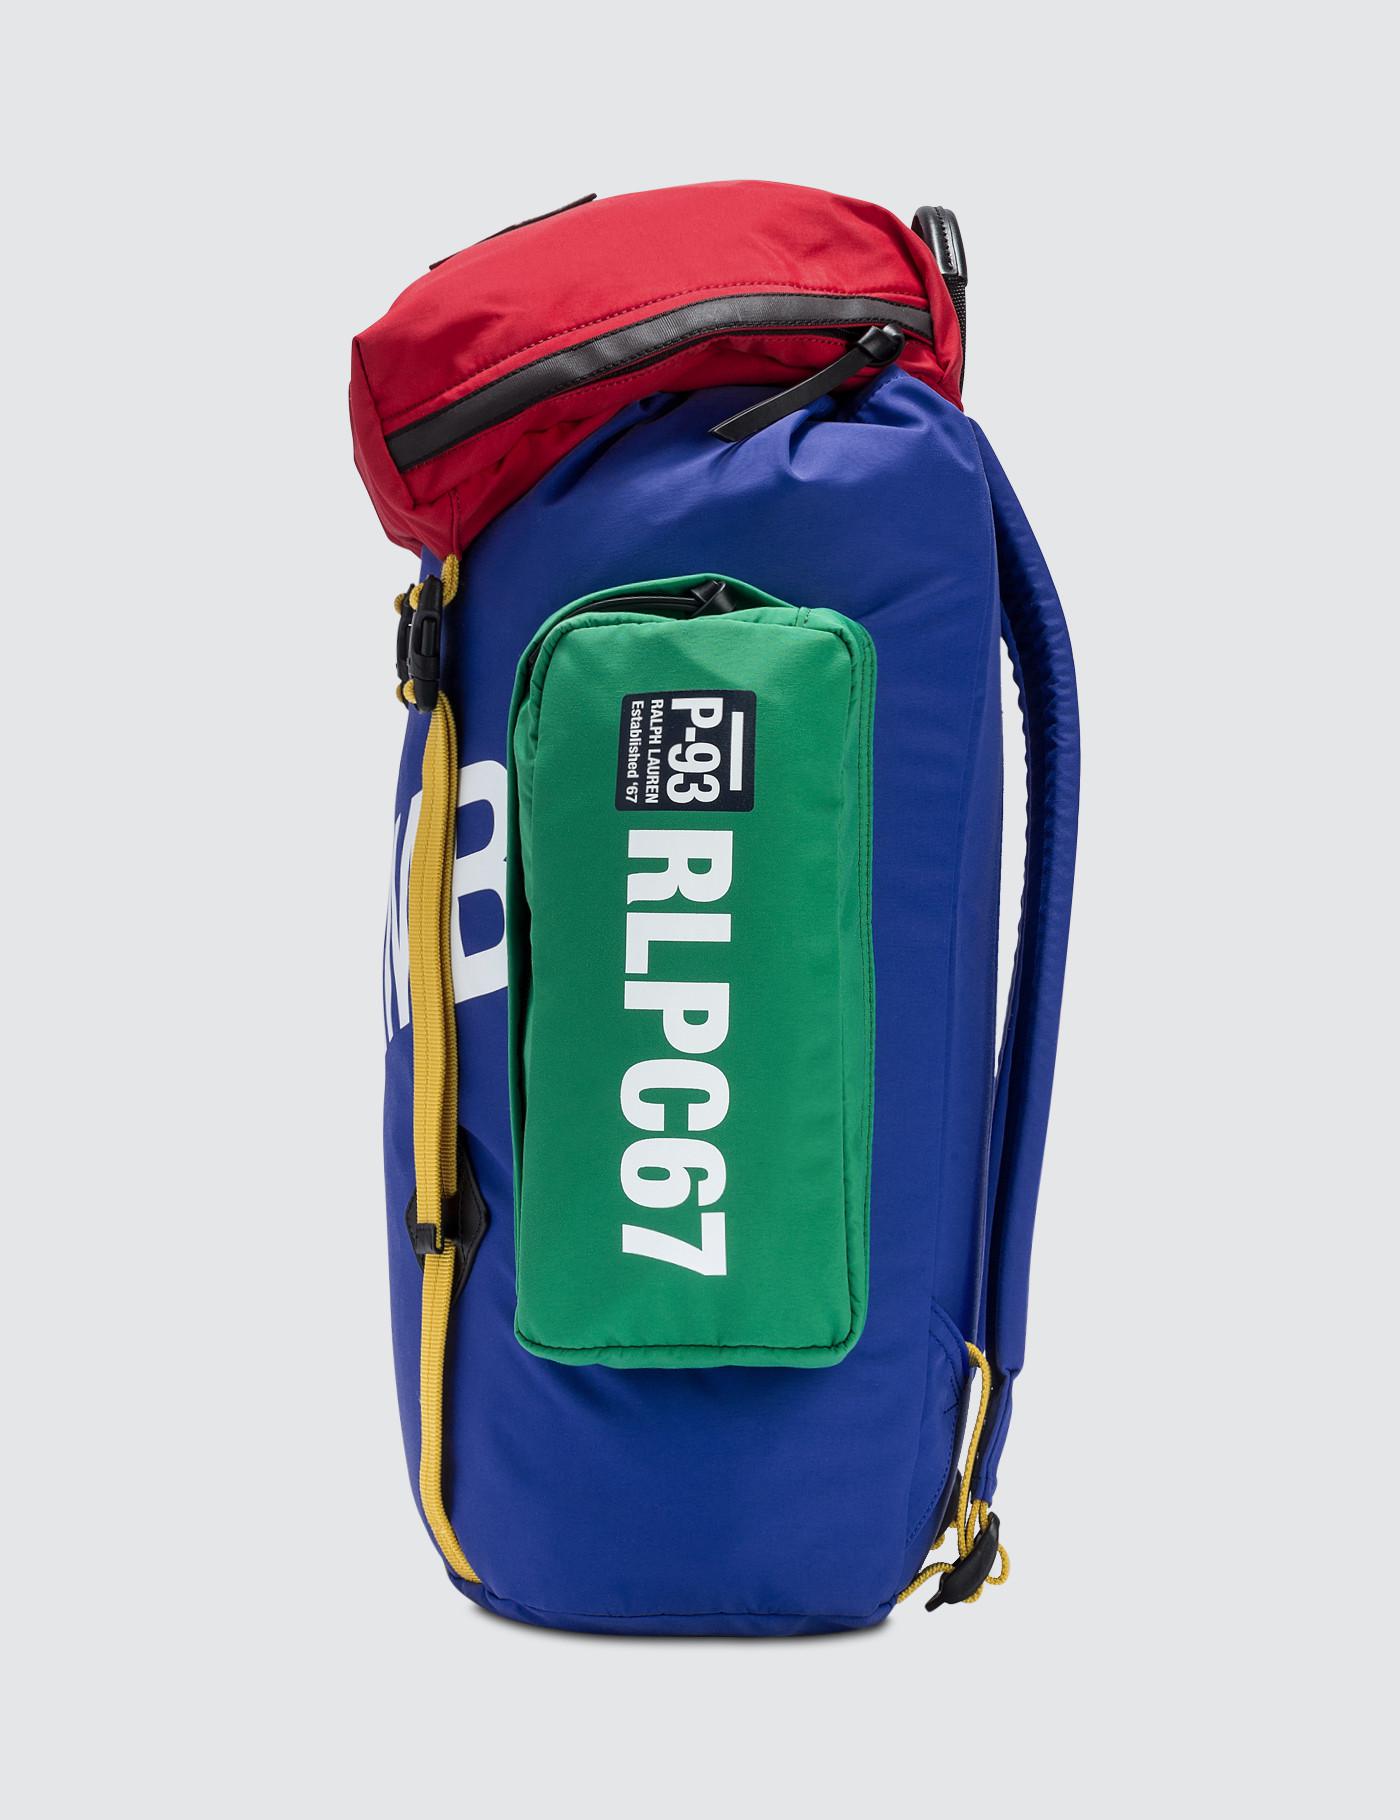 Lyst - Polo Ralph Lauren Hi Tech Backpack in Blue for Men